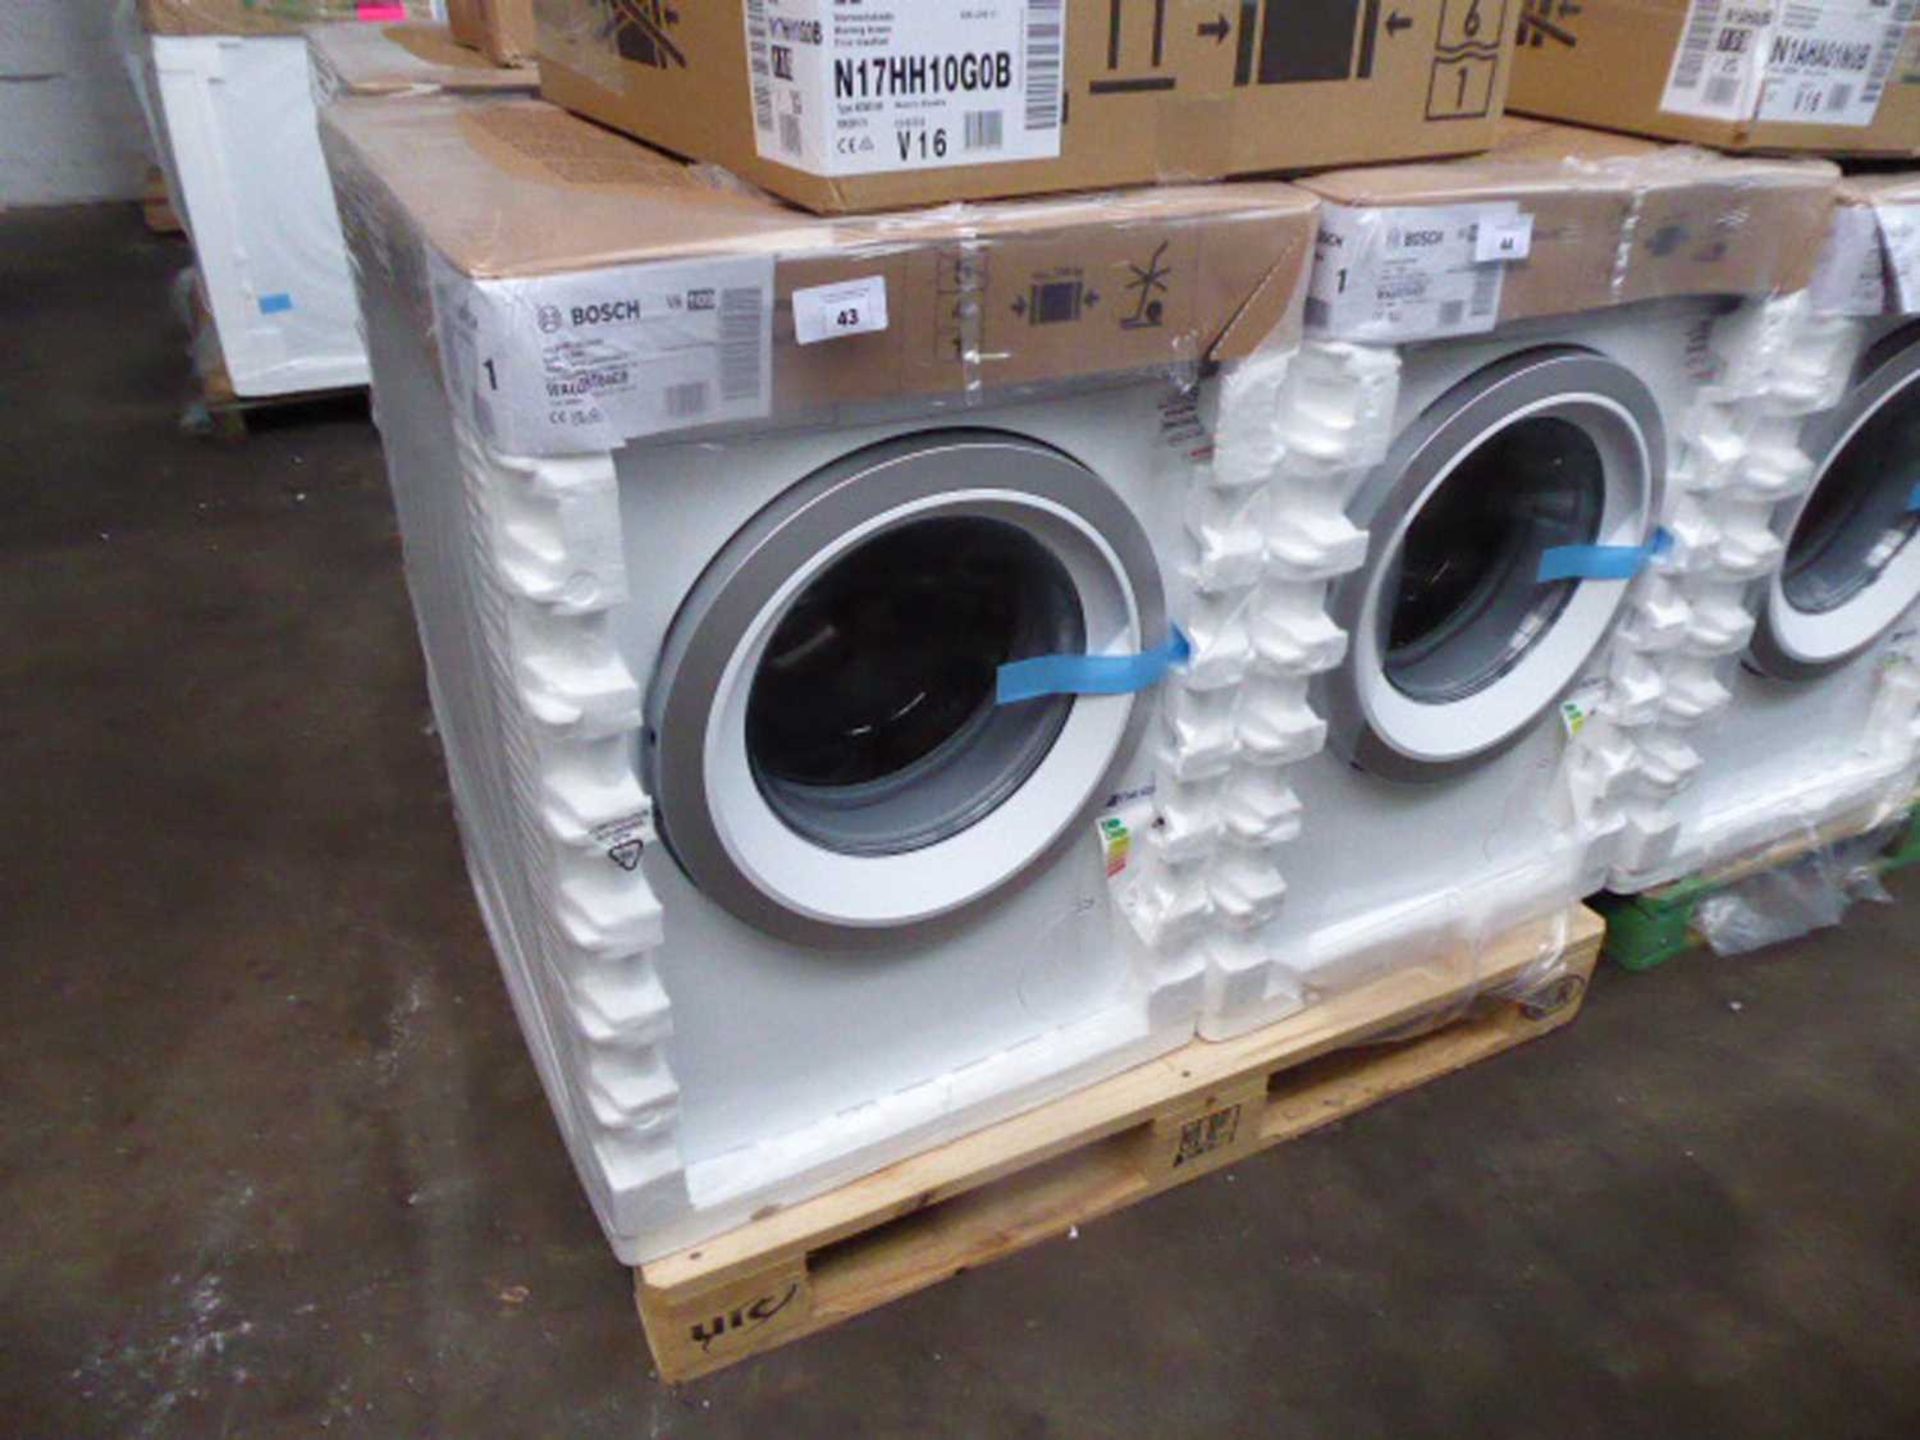 +VAT WAU28T64GBB - Bosch - Washing machine